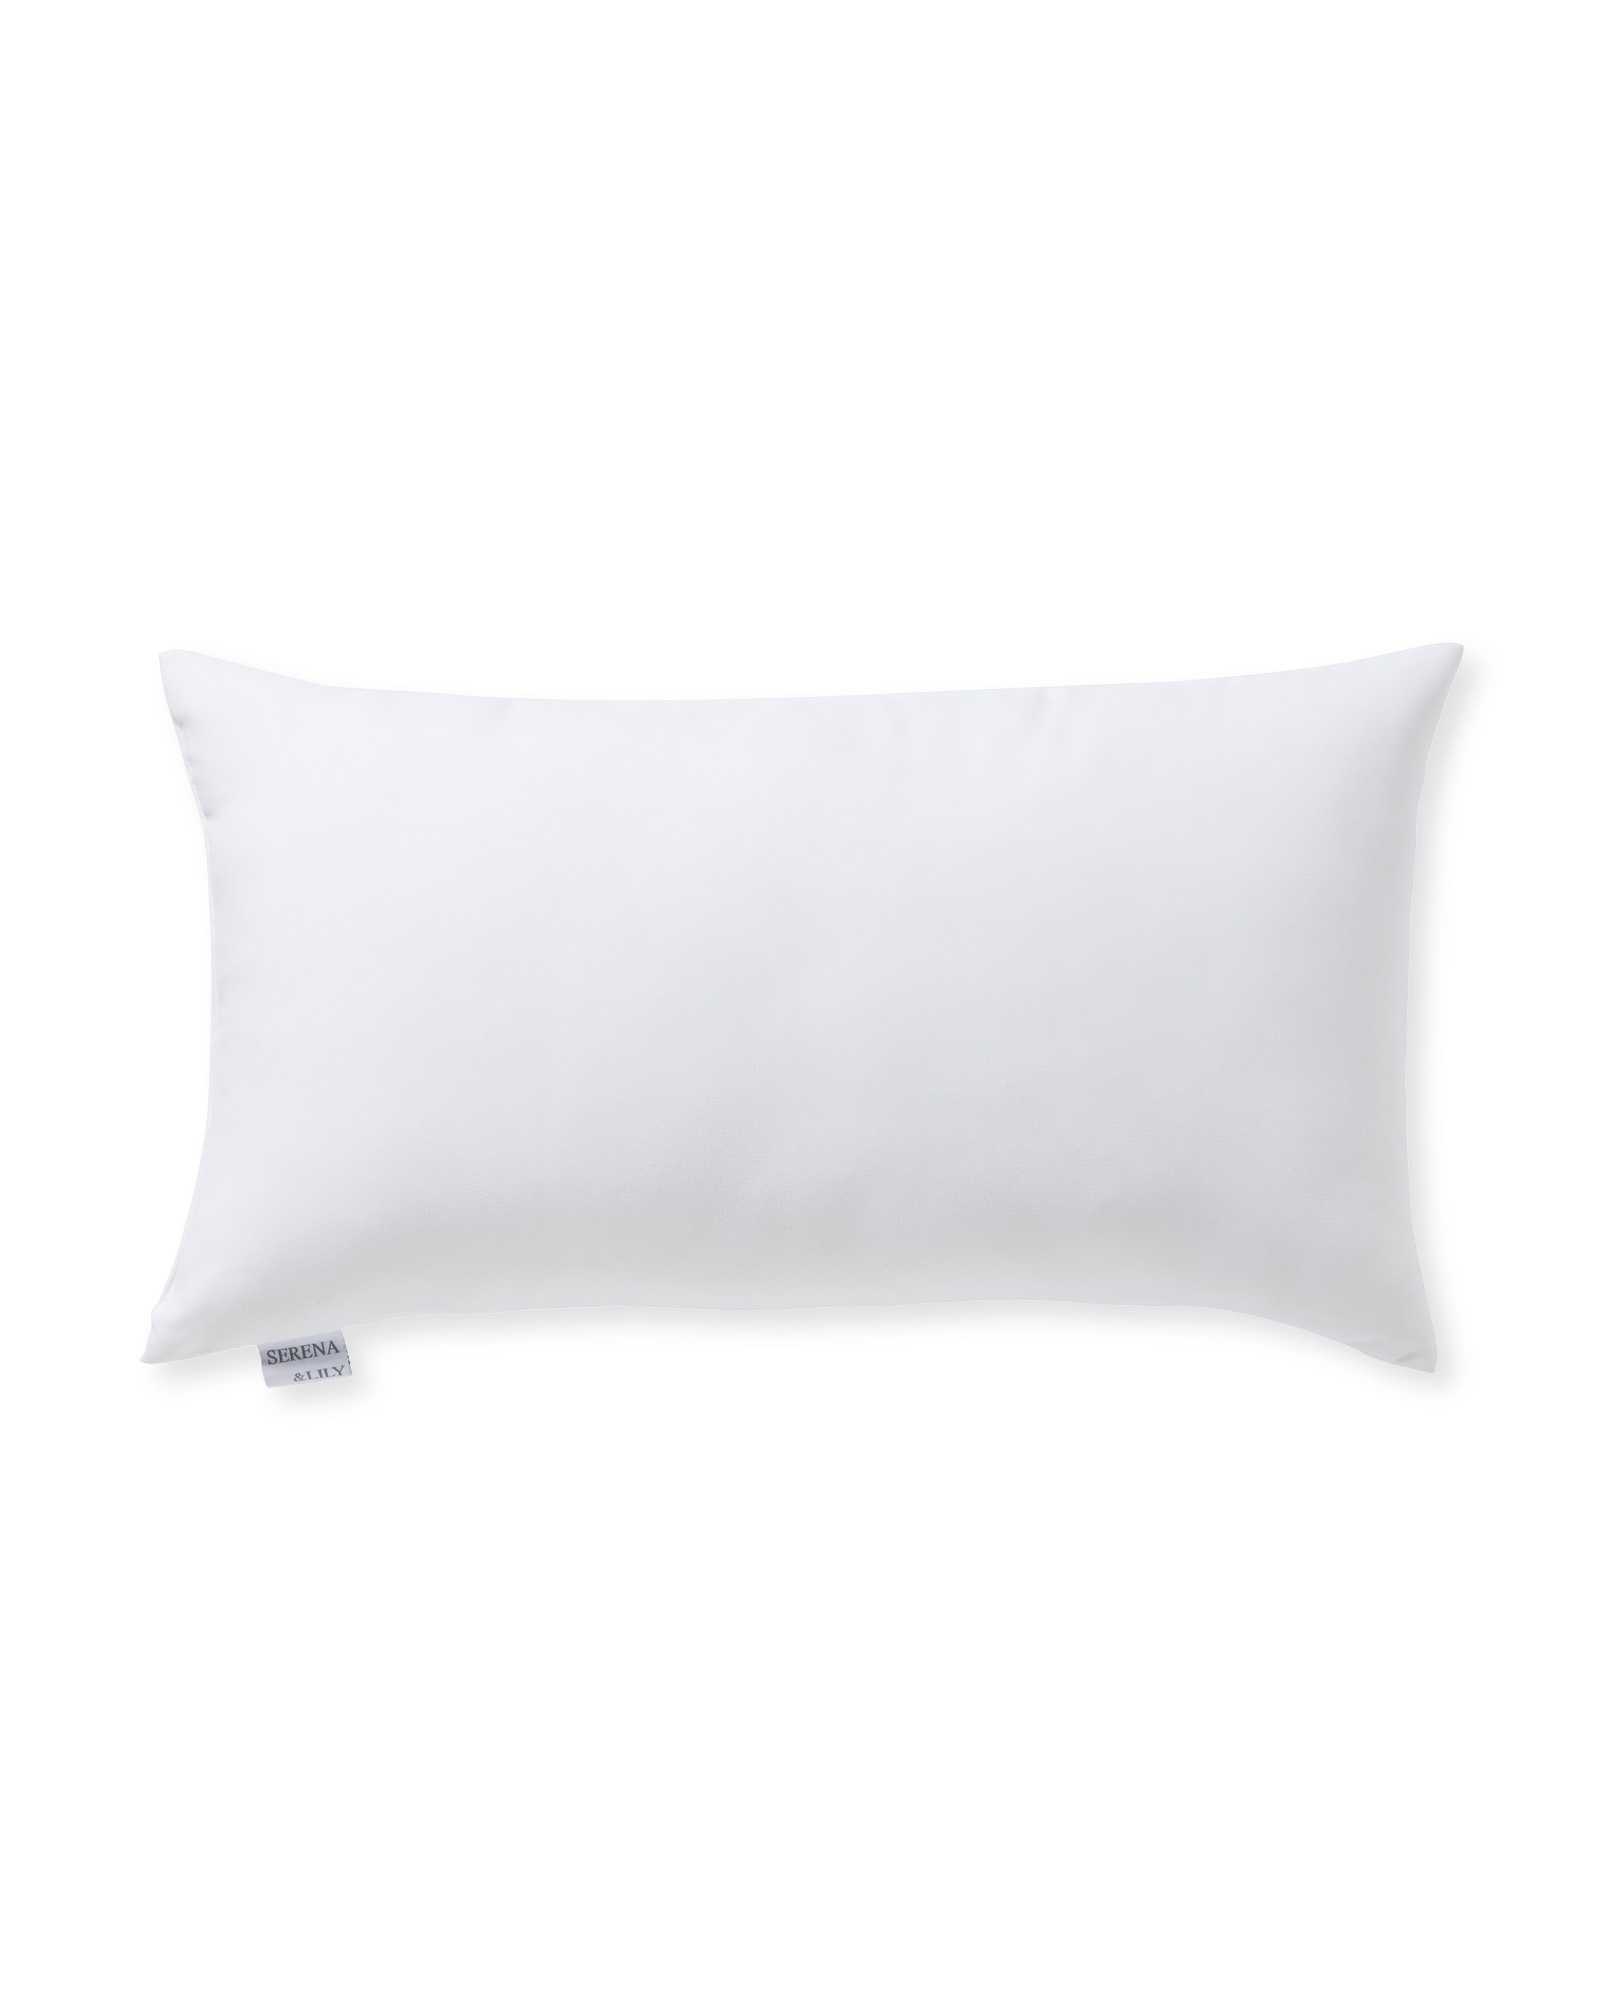 Outdoor Pillow Insert - 12" x 21" - Image 0